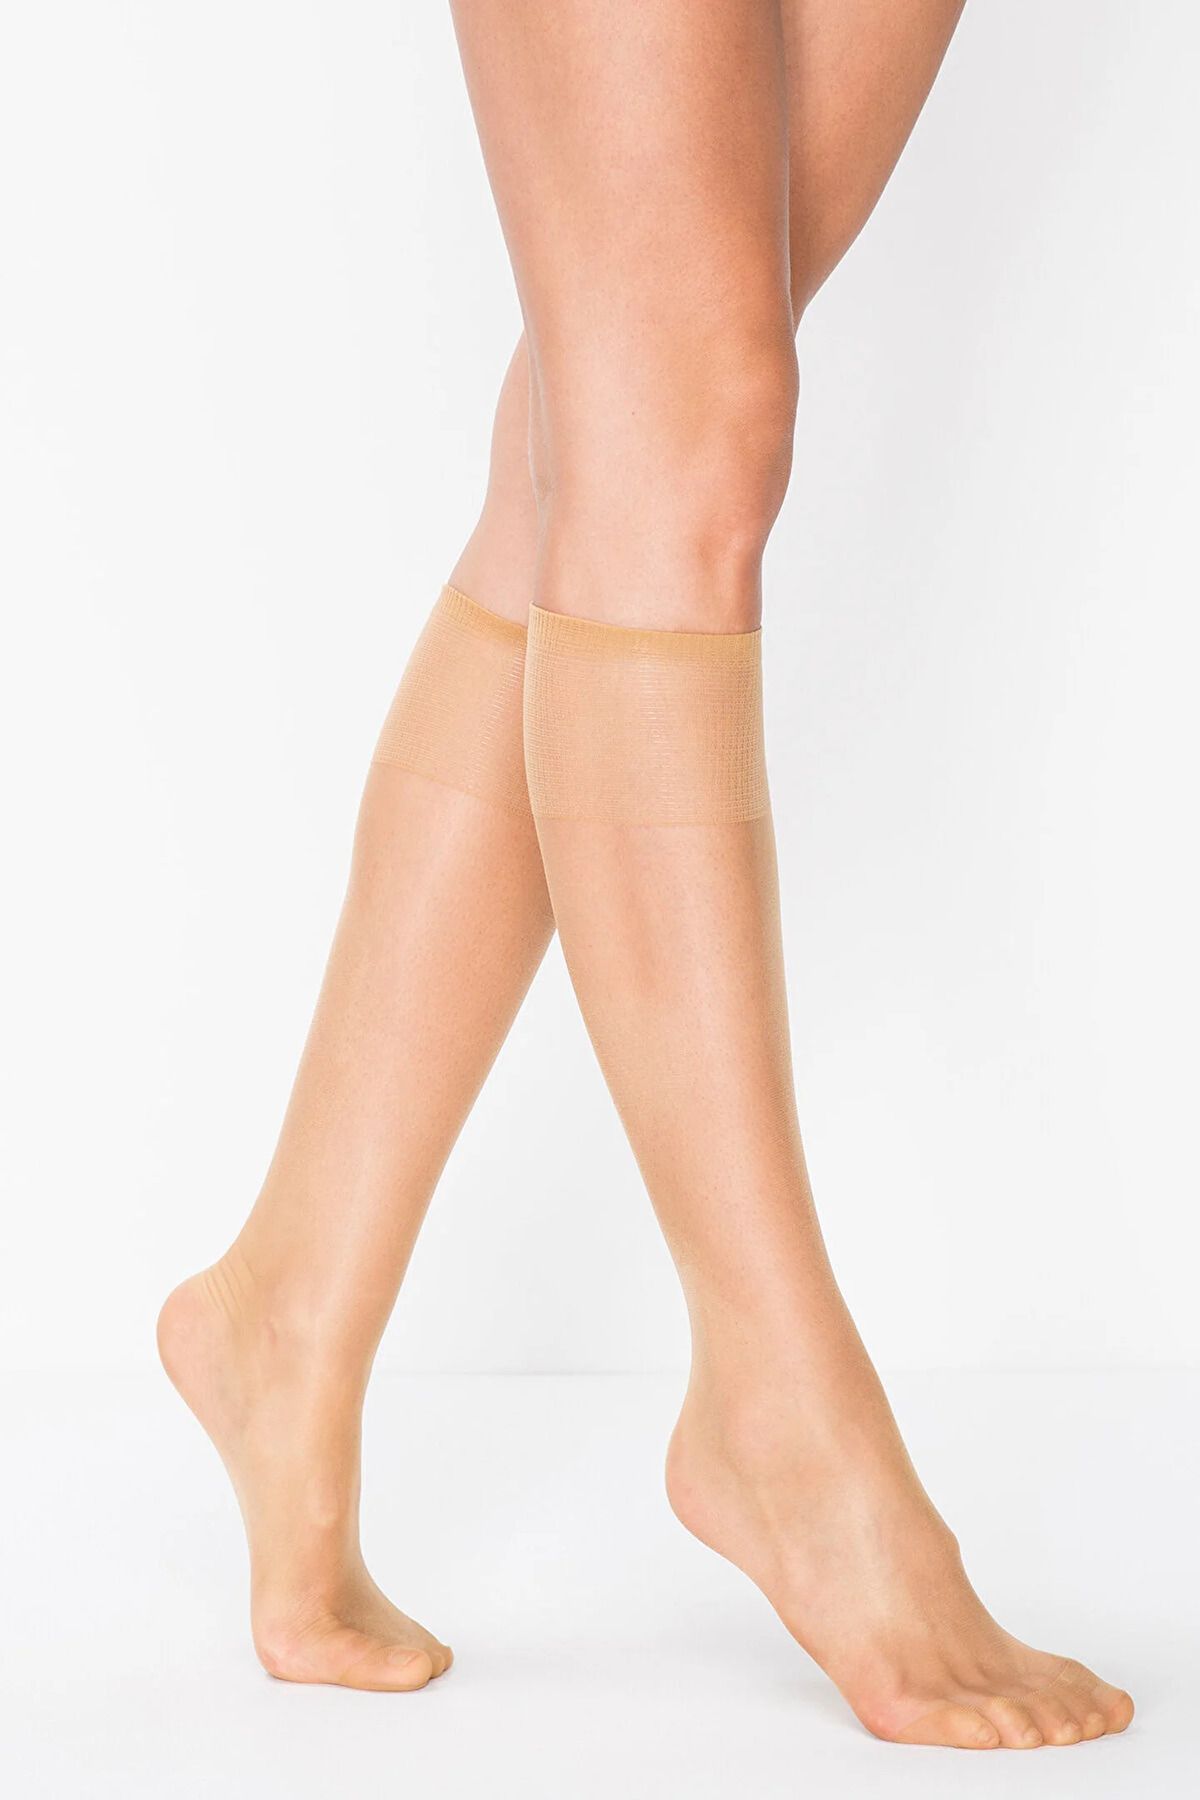 Orn Condor Women's Knee Pad Black Combat Trousers - Tall Leg - PF Cusack